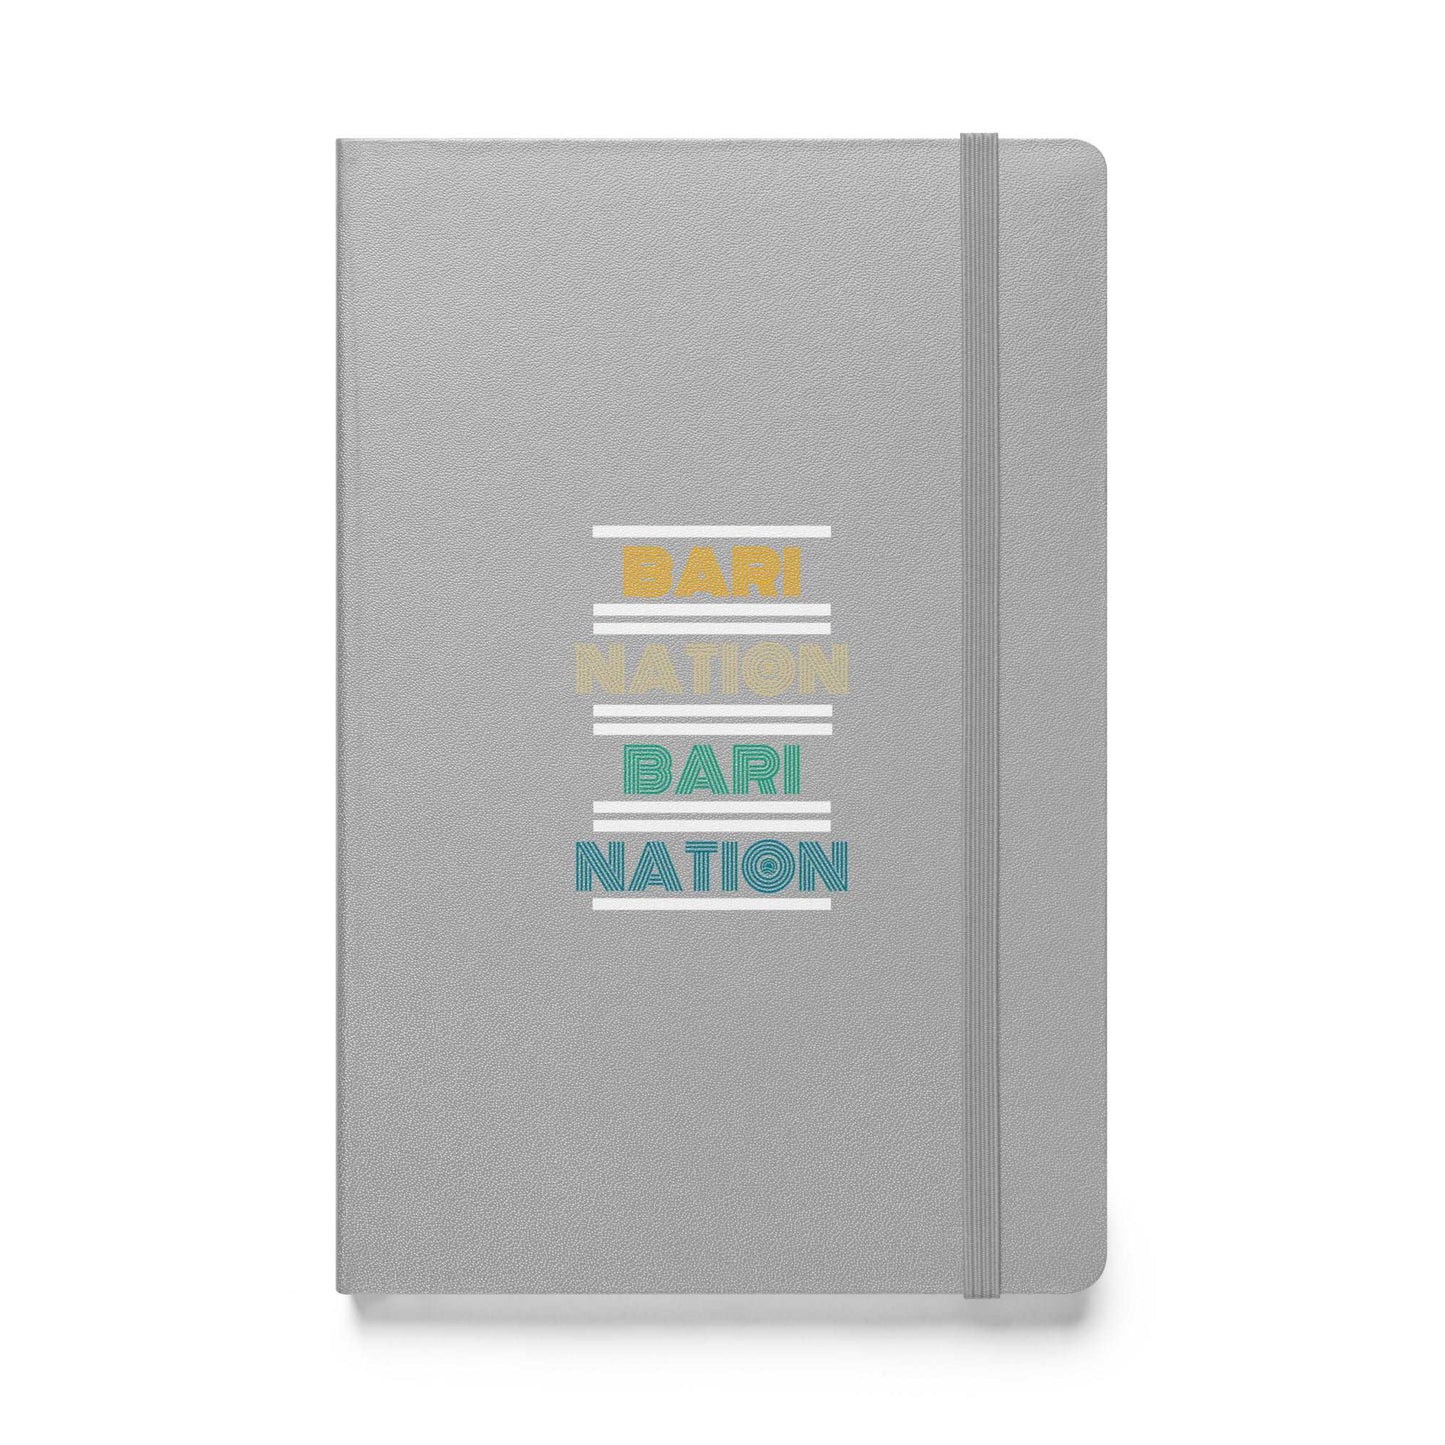 BariNation Hardcover Notebook